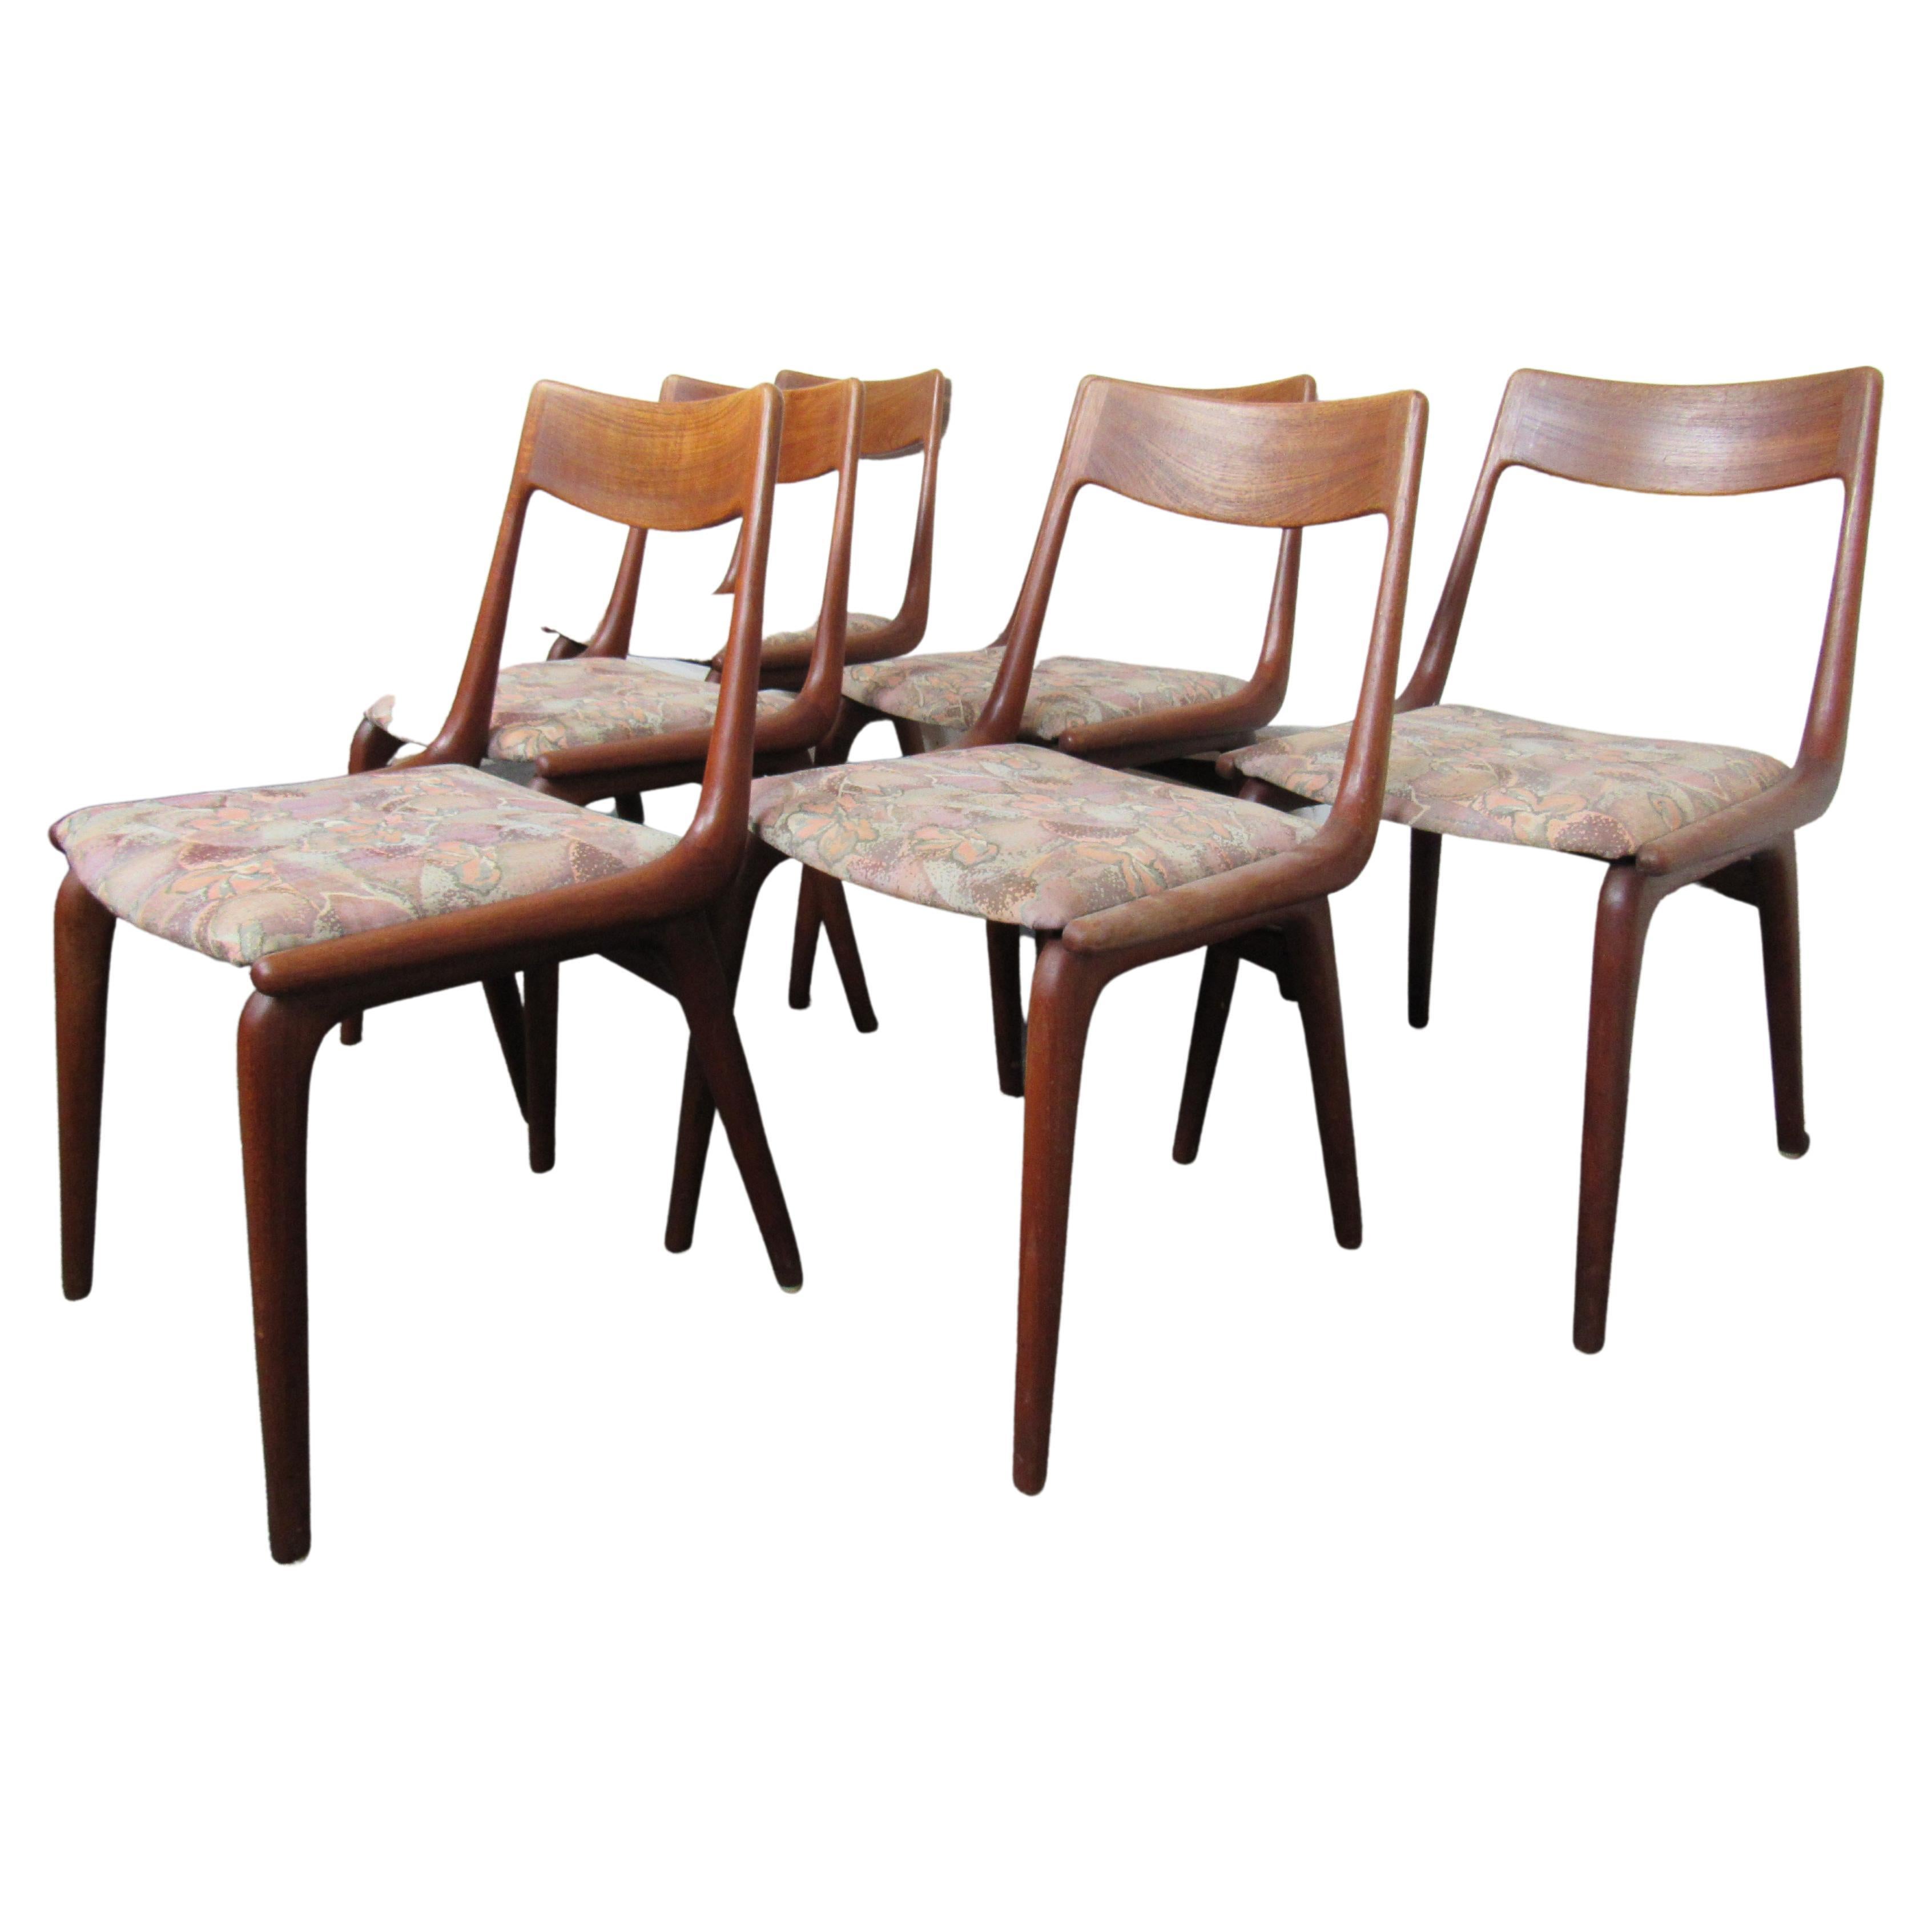 Set of Six Mid-Century Modern Teak Chairs